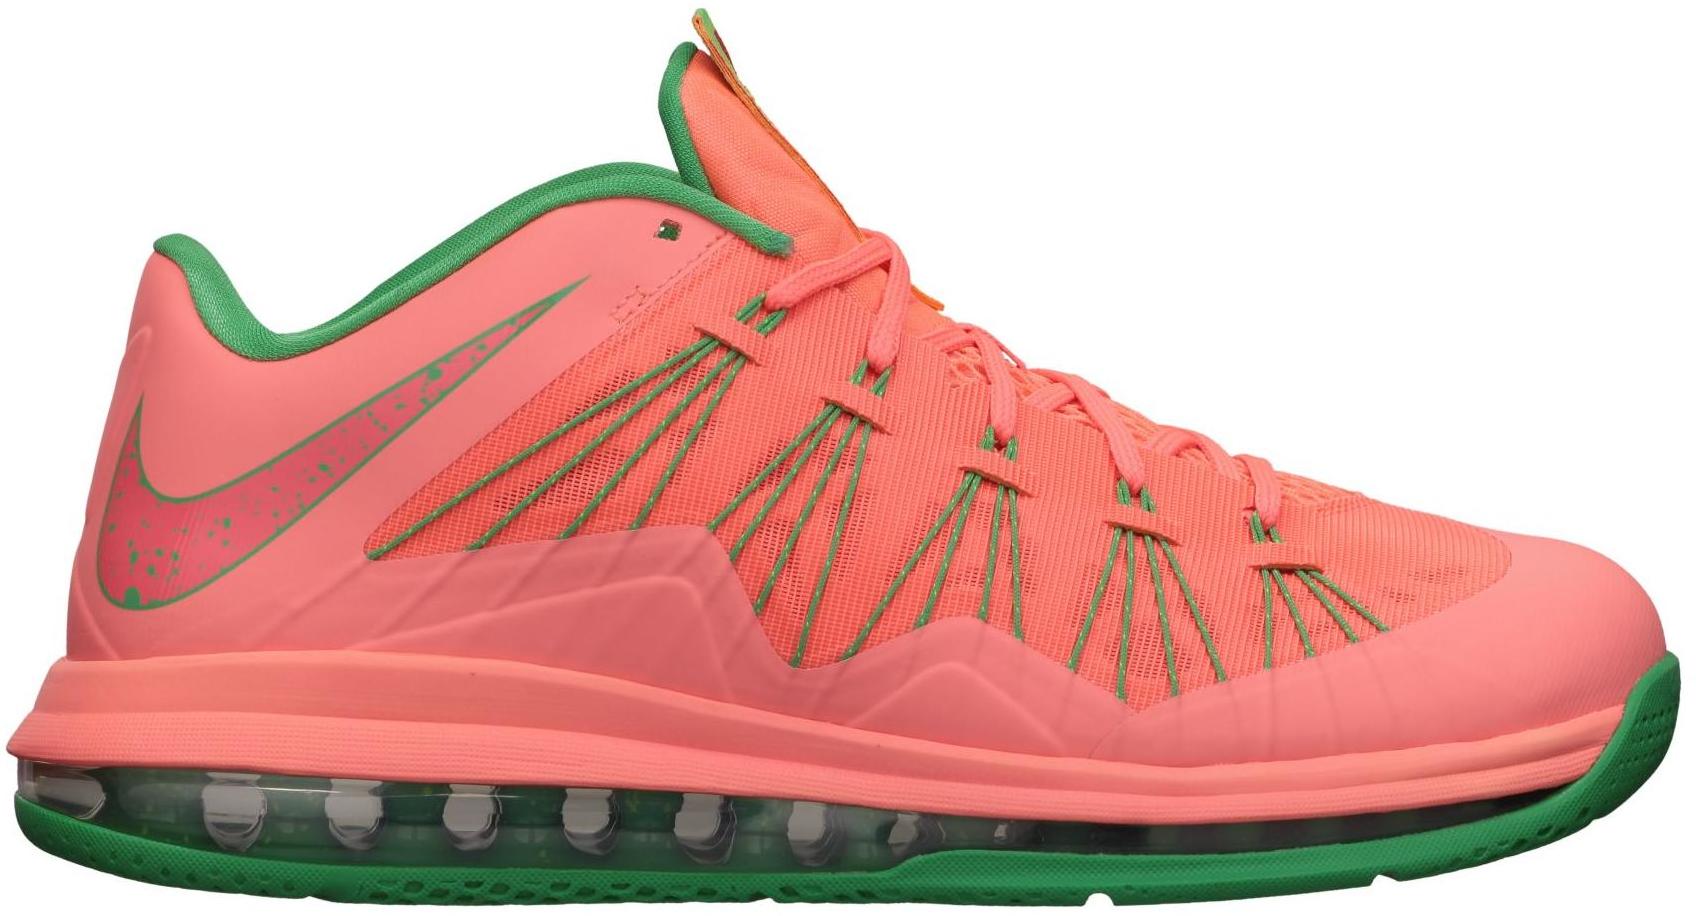 Nike LeBron X Low Watermelon - 579765-801